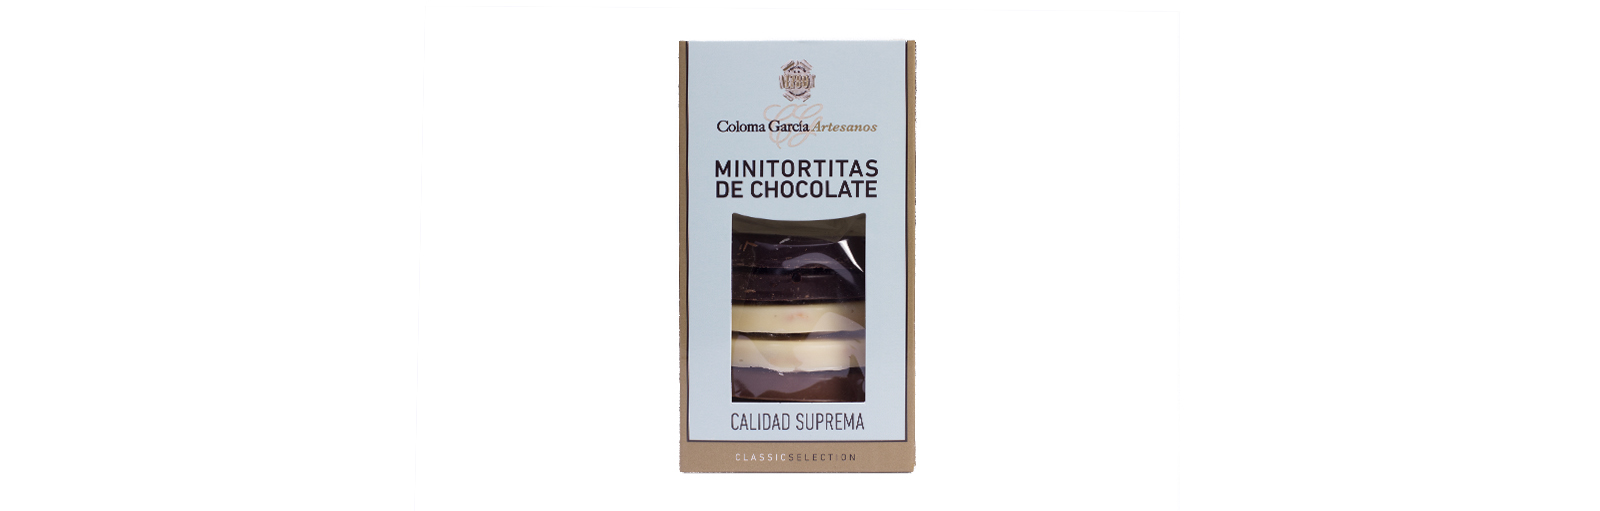 minitortitas chocolate